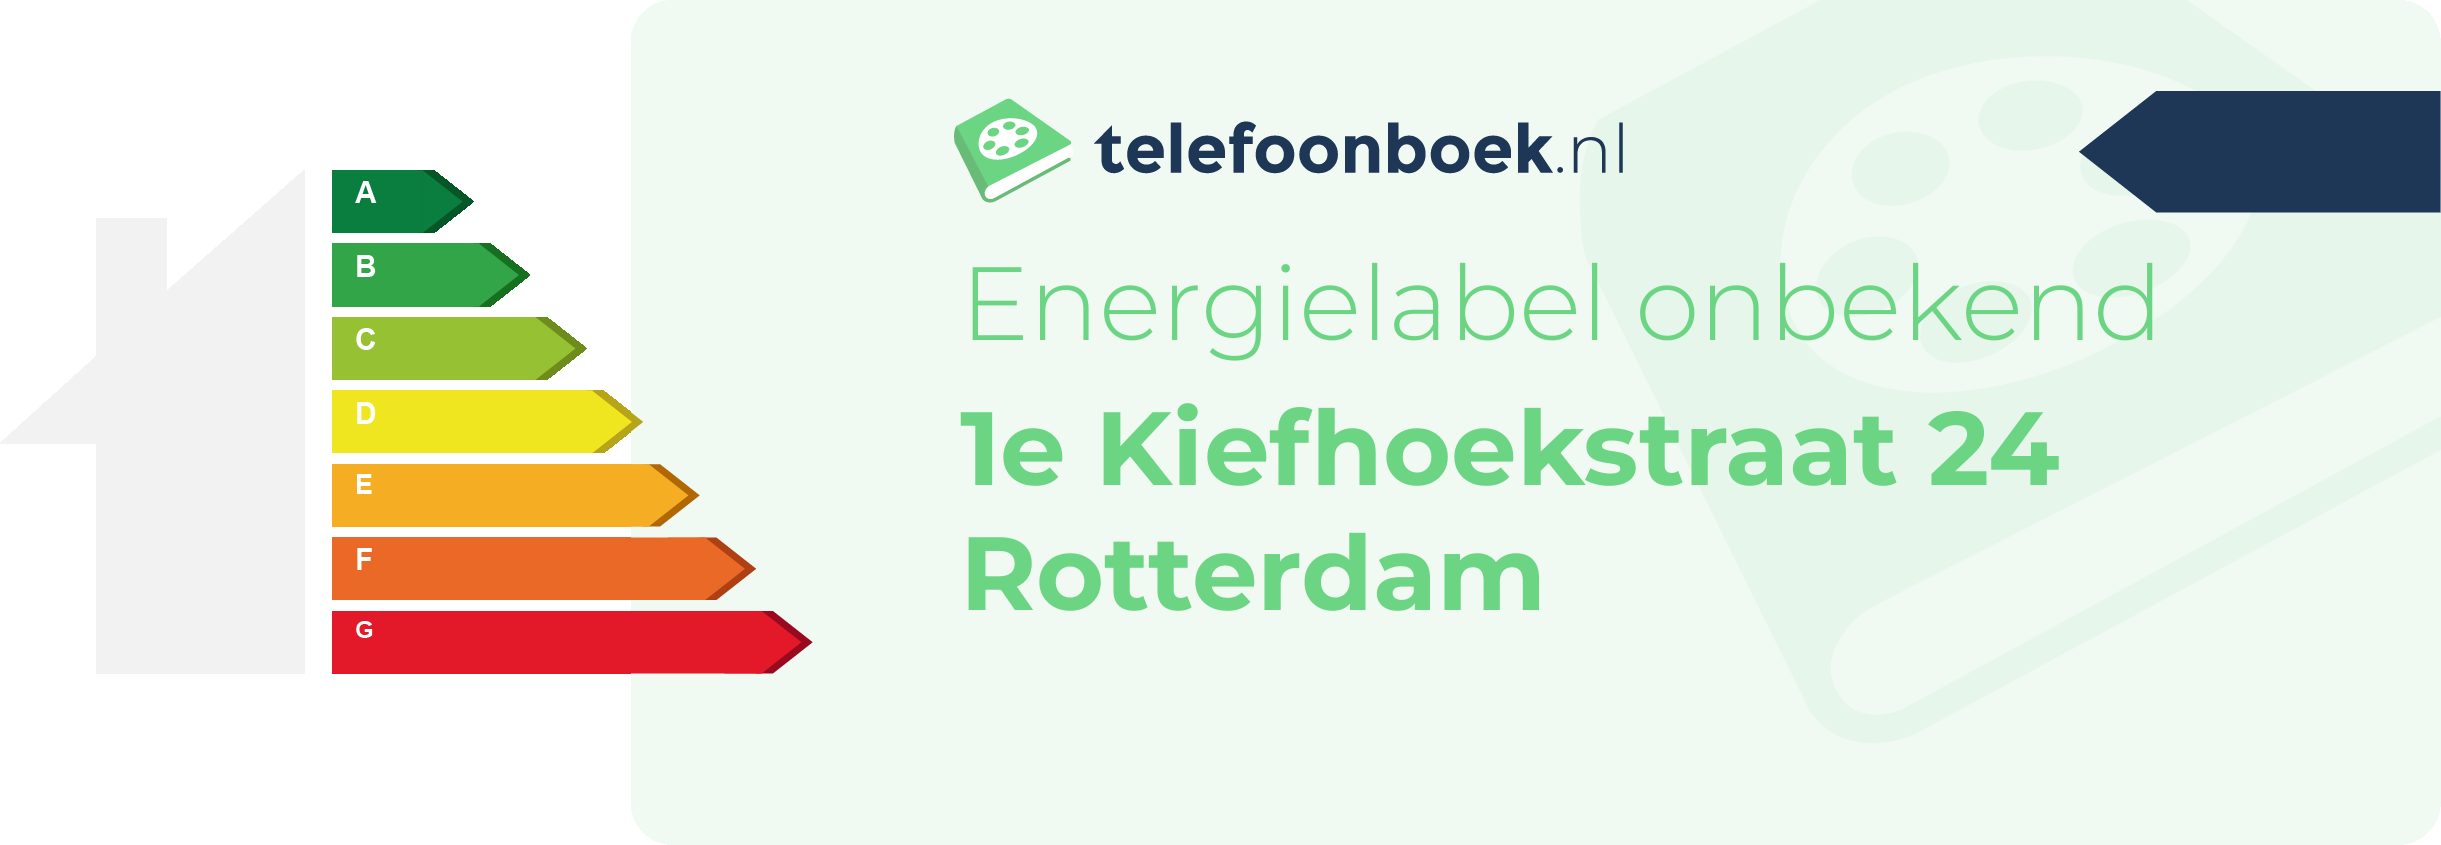 Energielabel 1e Kiefhoekstraat 24 Rotterdam